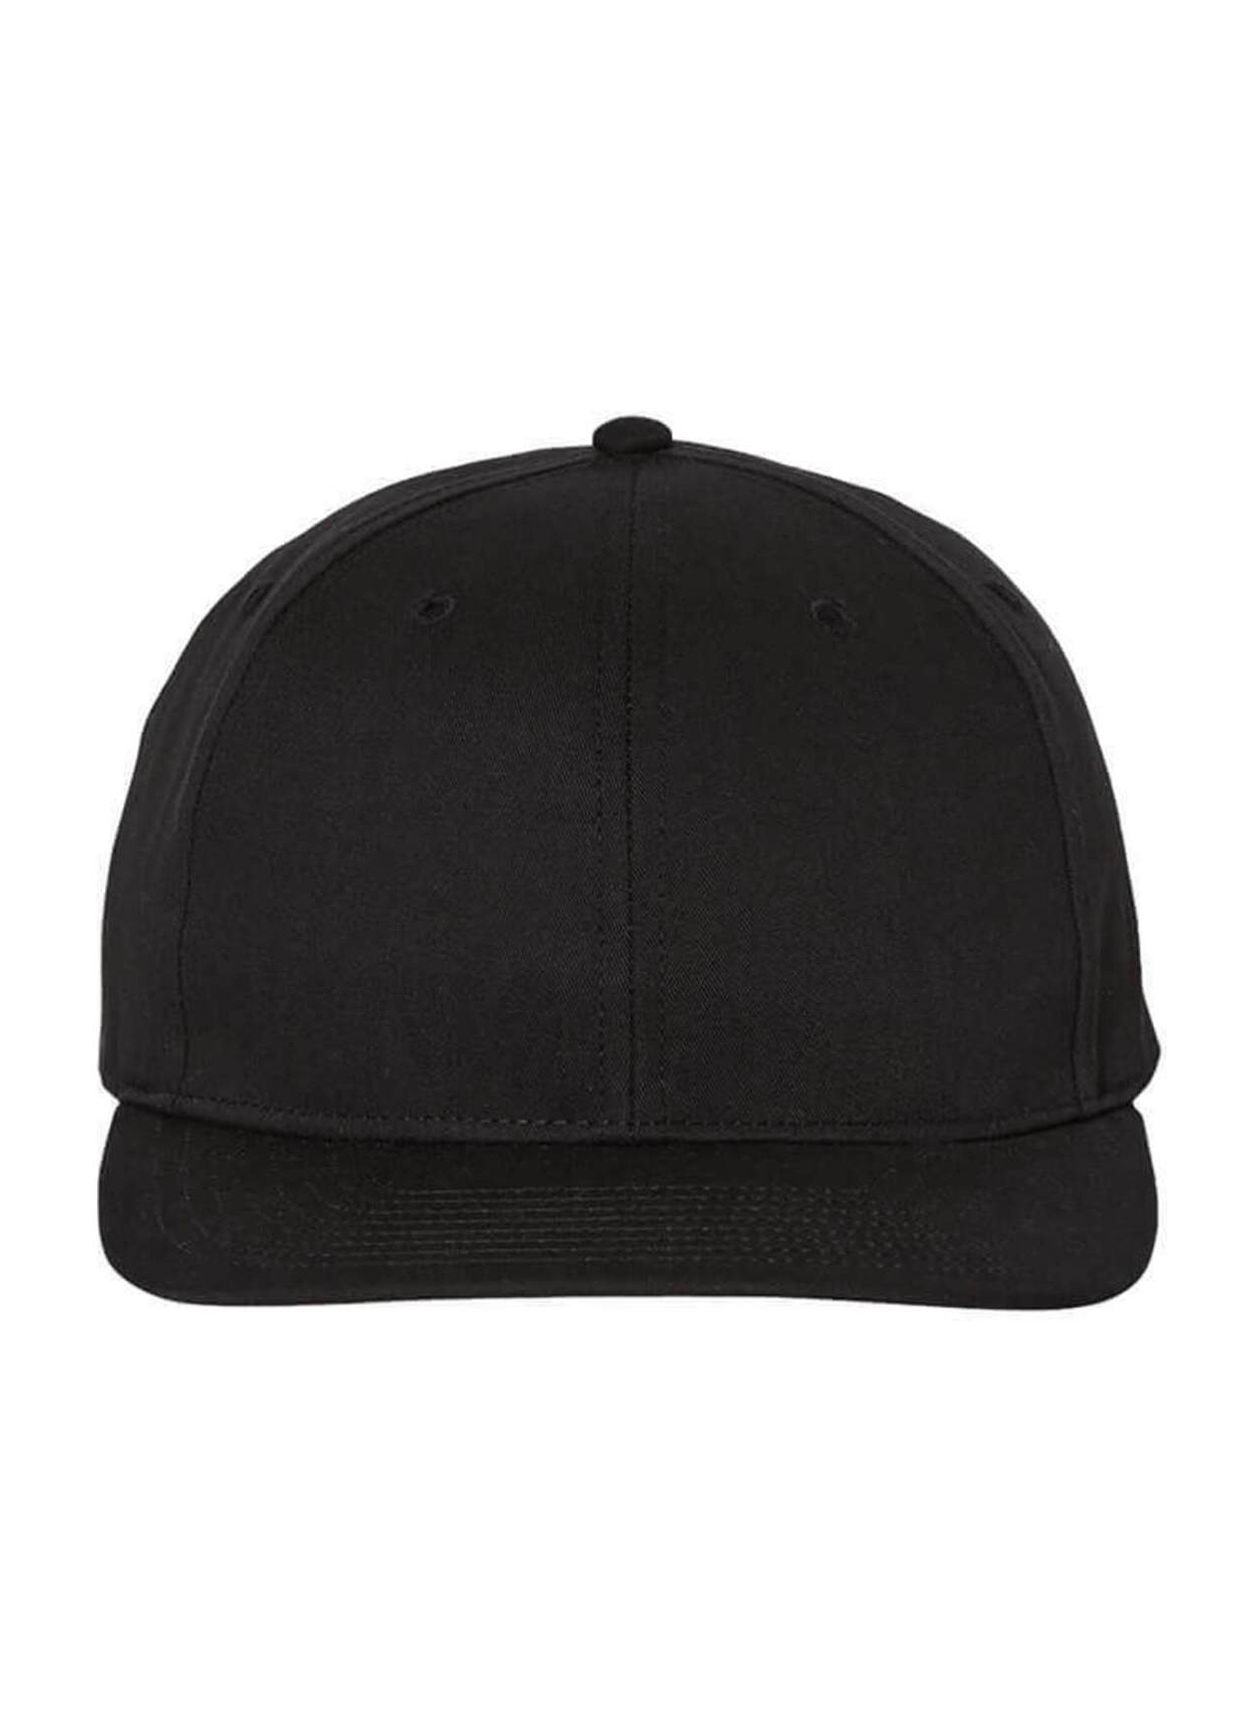 Richardson Black Pro Twill Snapback Hat